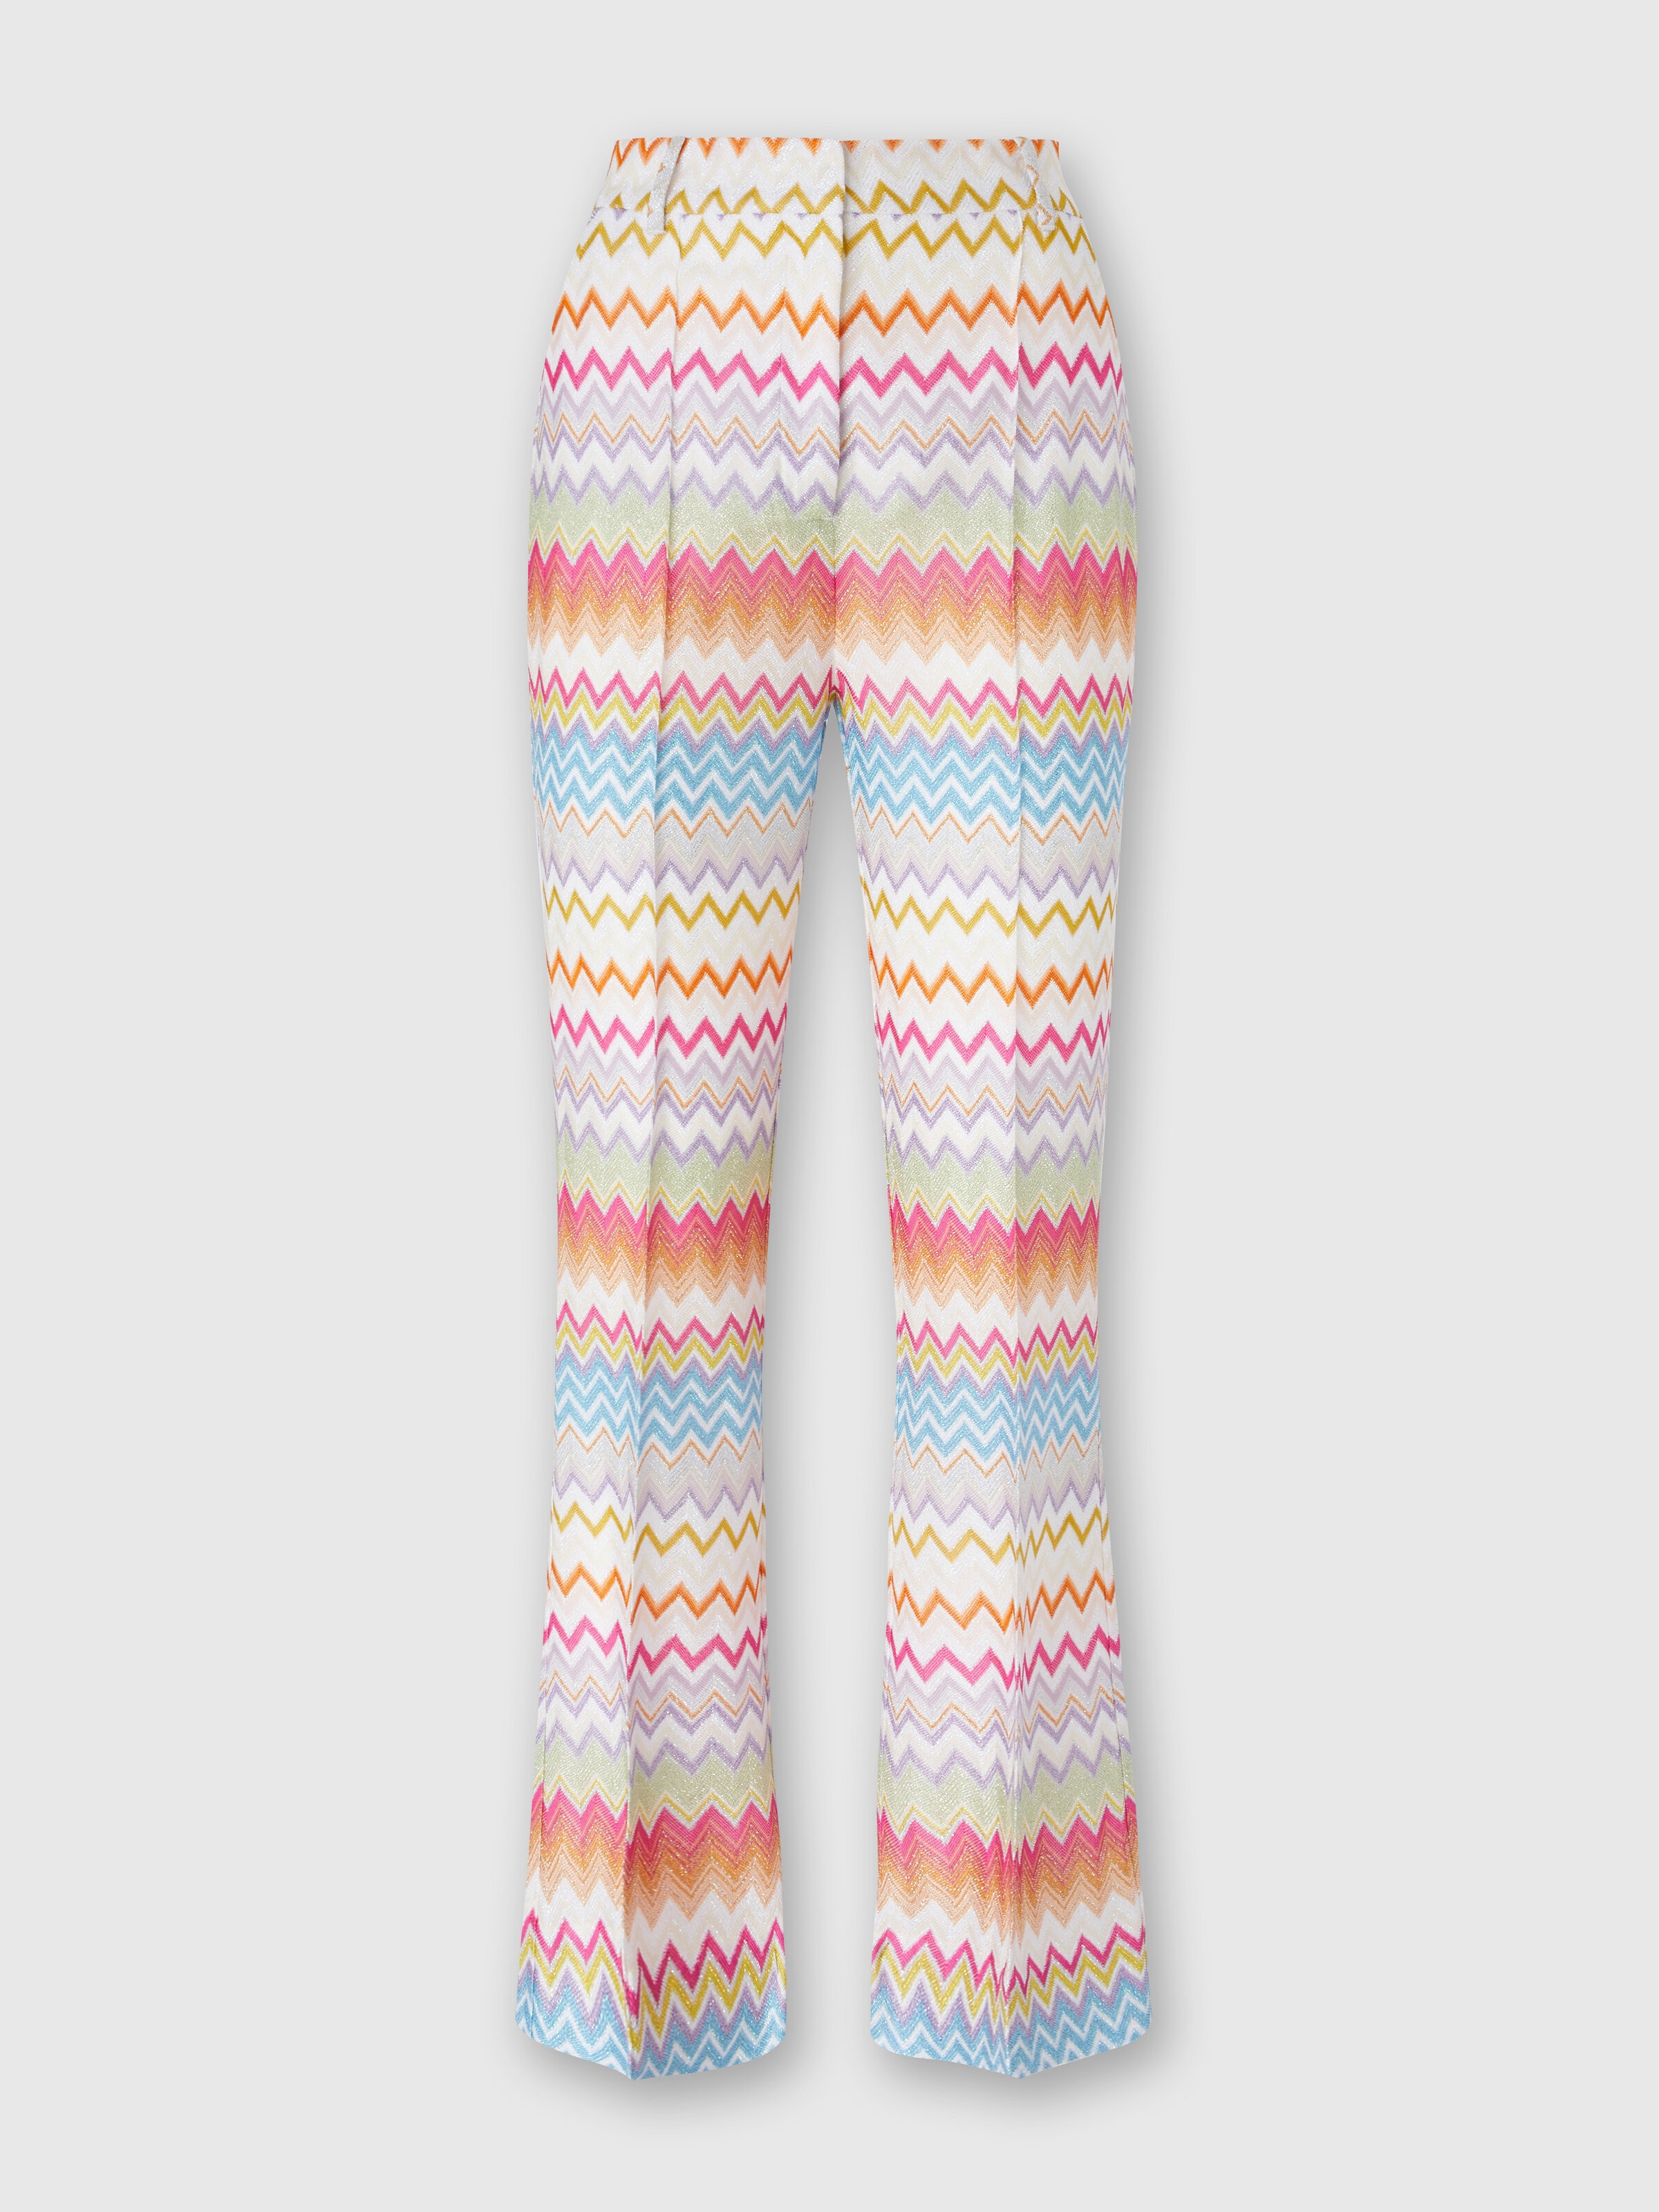 Capri trousers in chevron lamé knit with sequins, Multicoloured  - 0